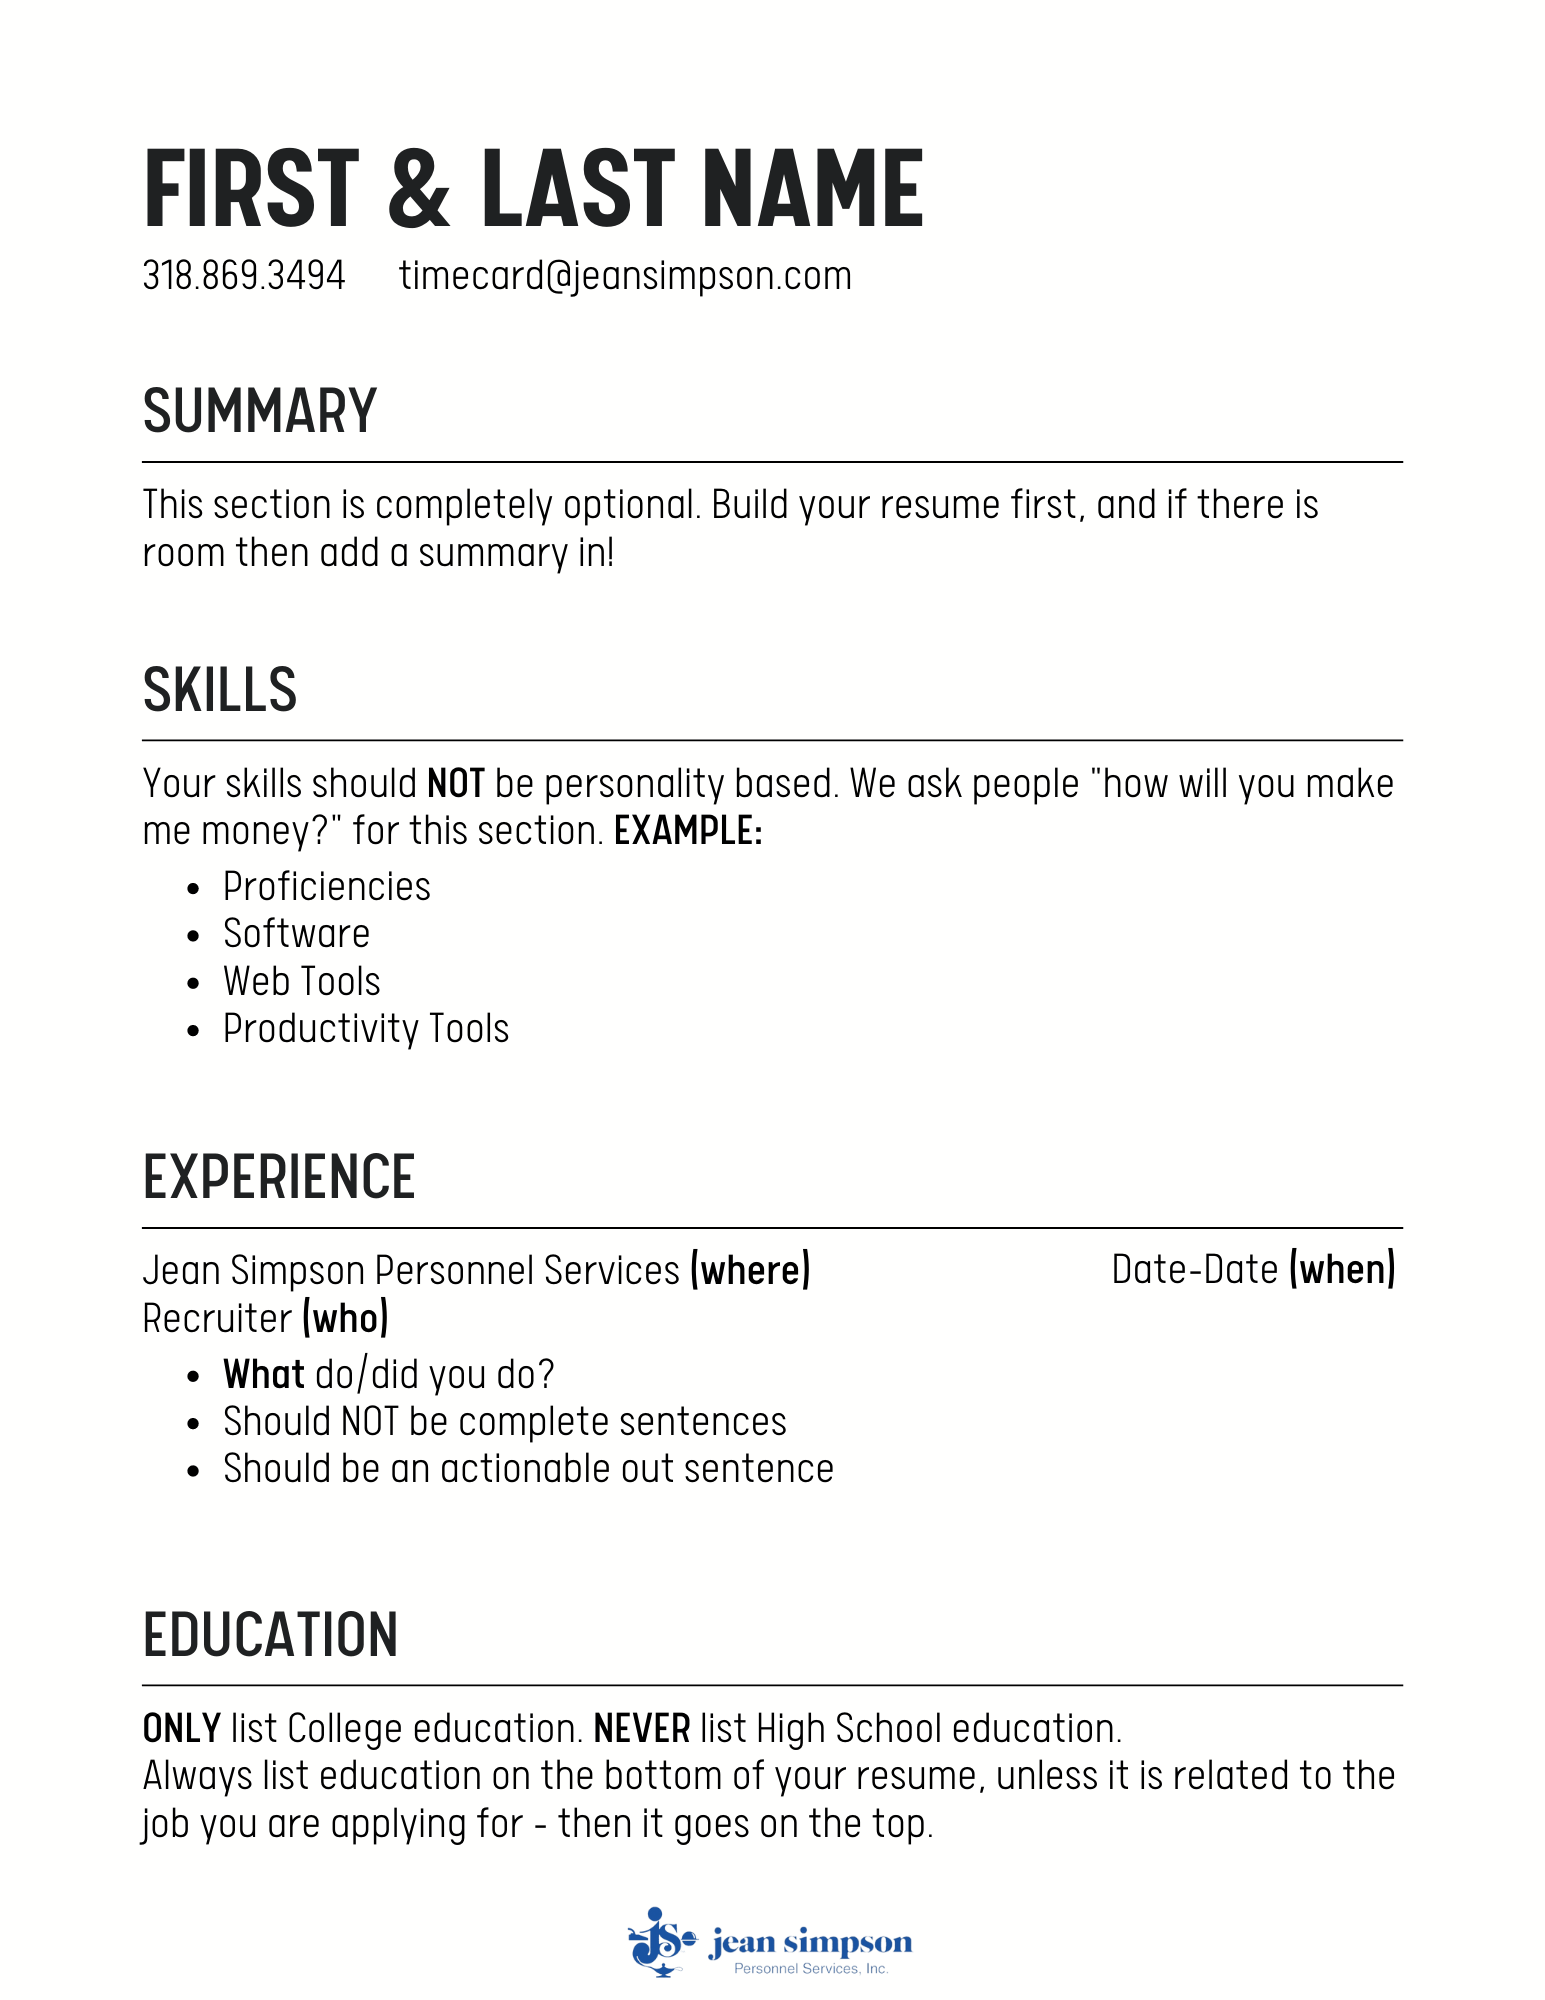 need help doing a resume